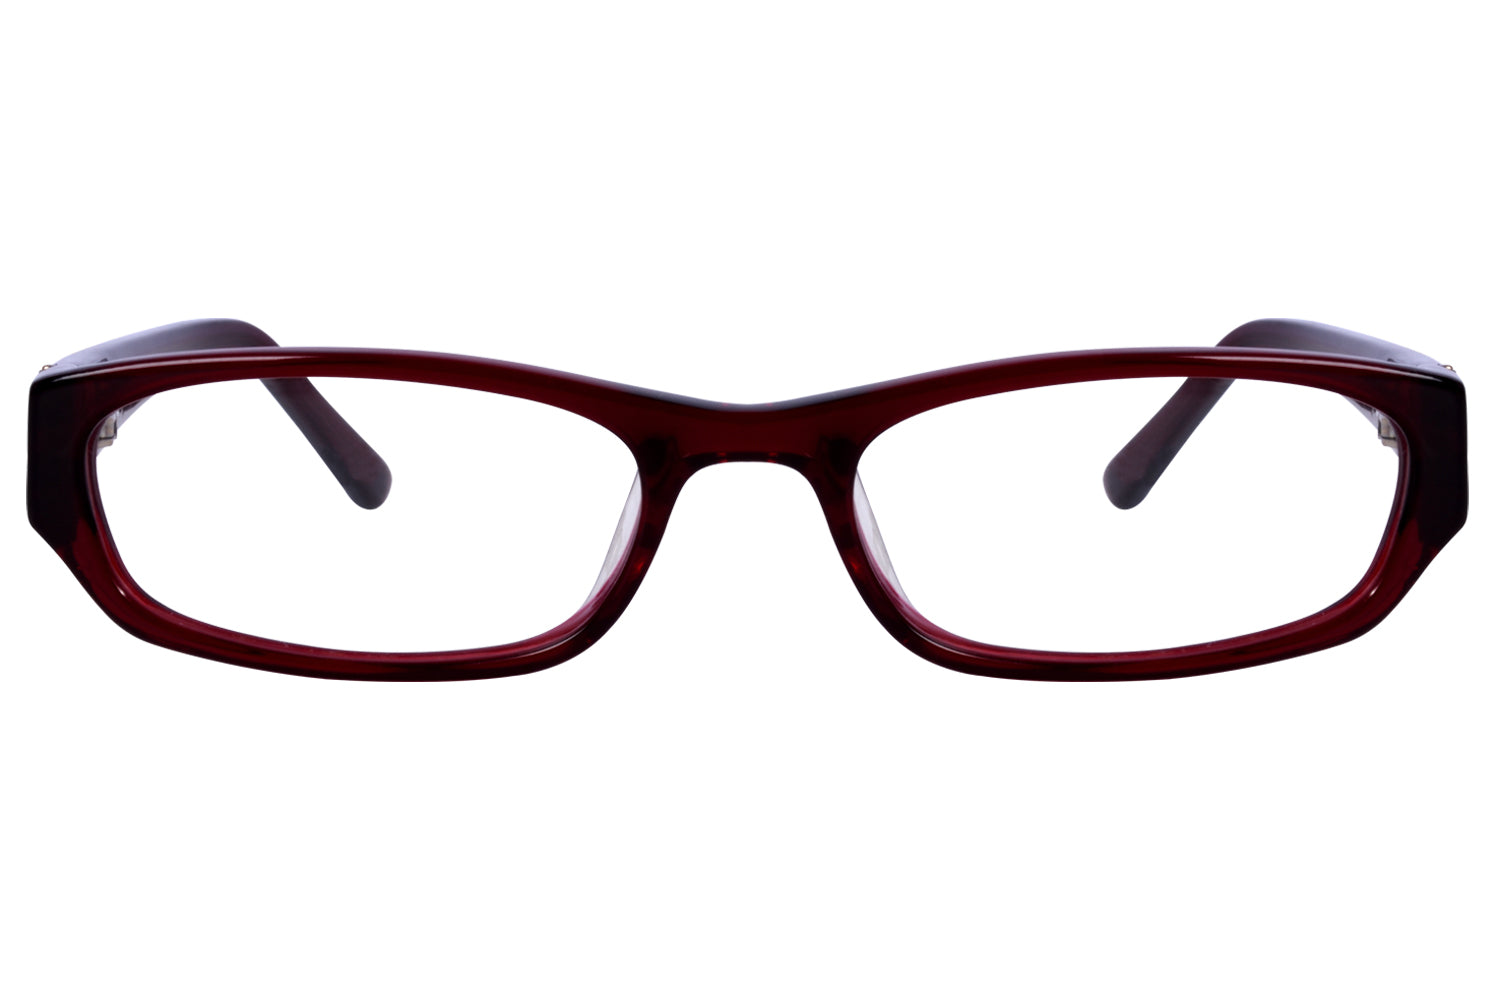 rectangular-shape-eyeglass